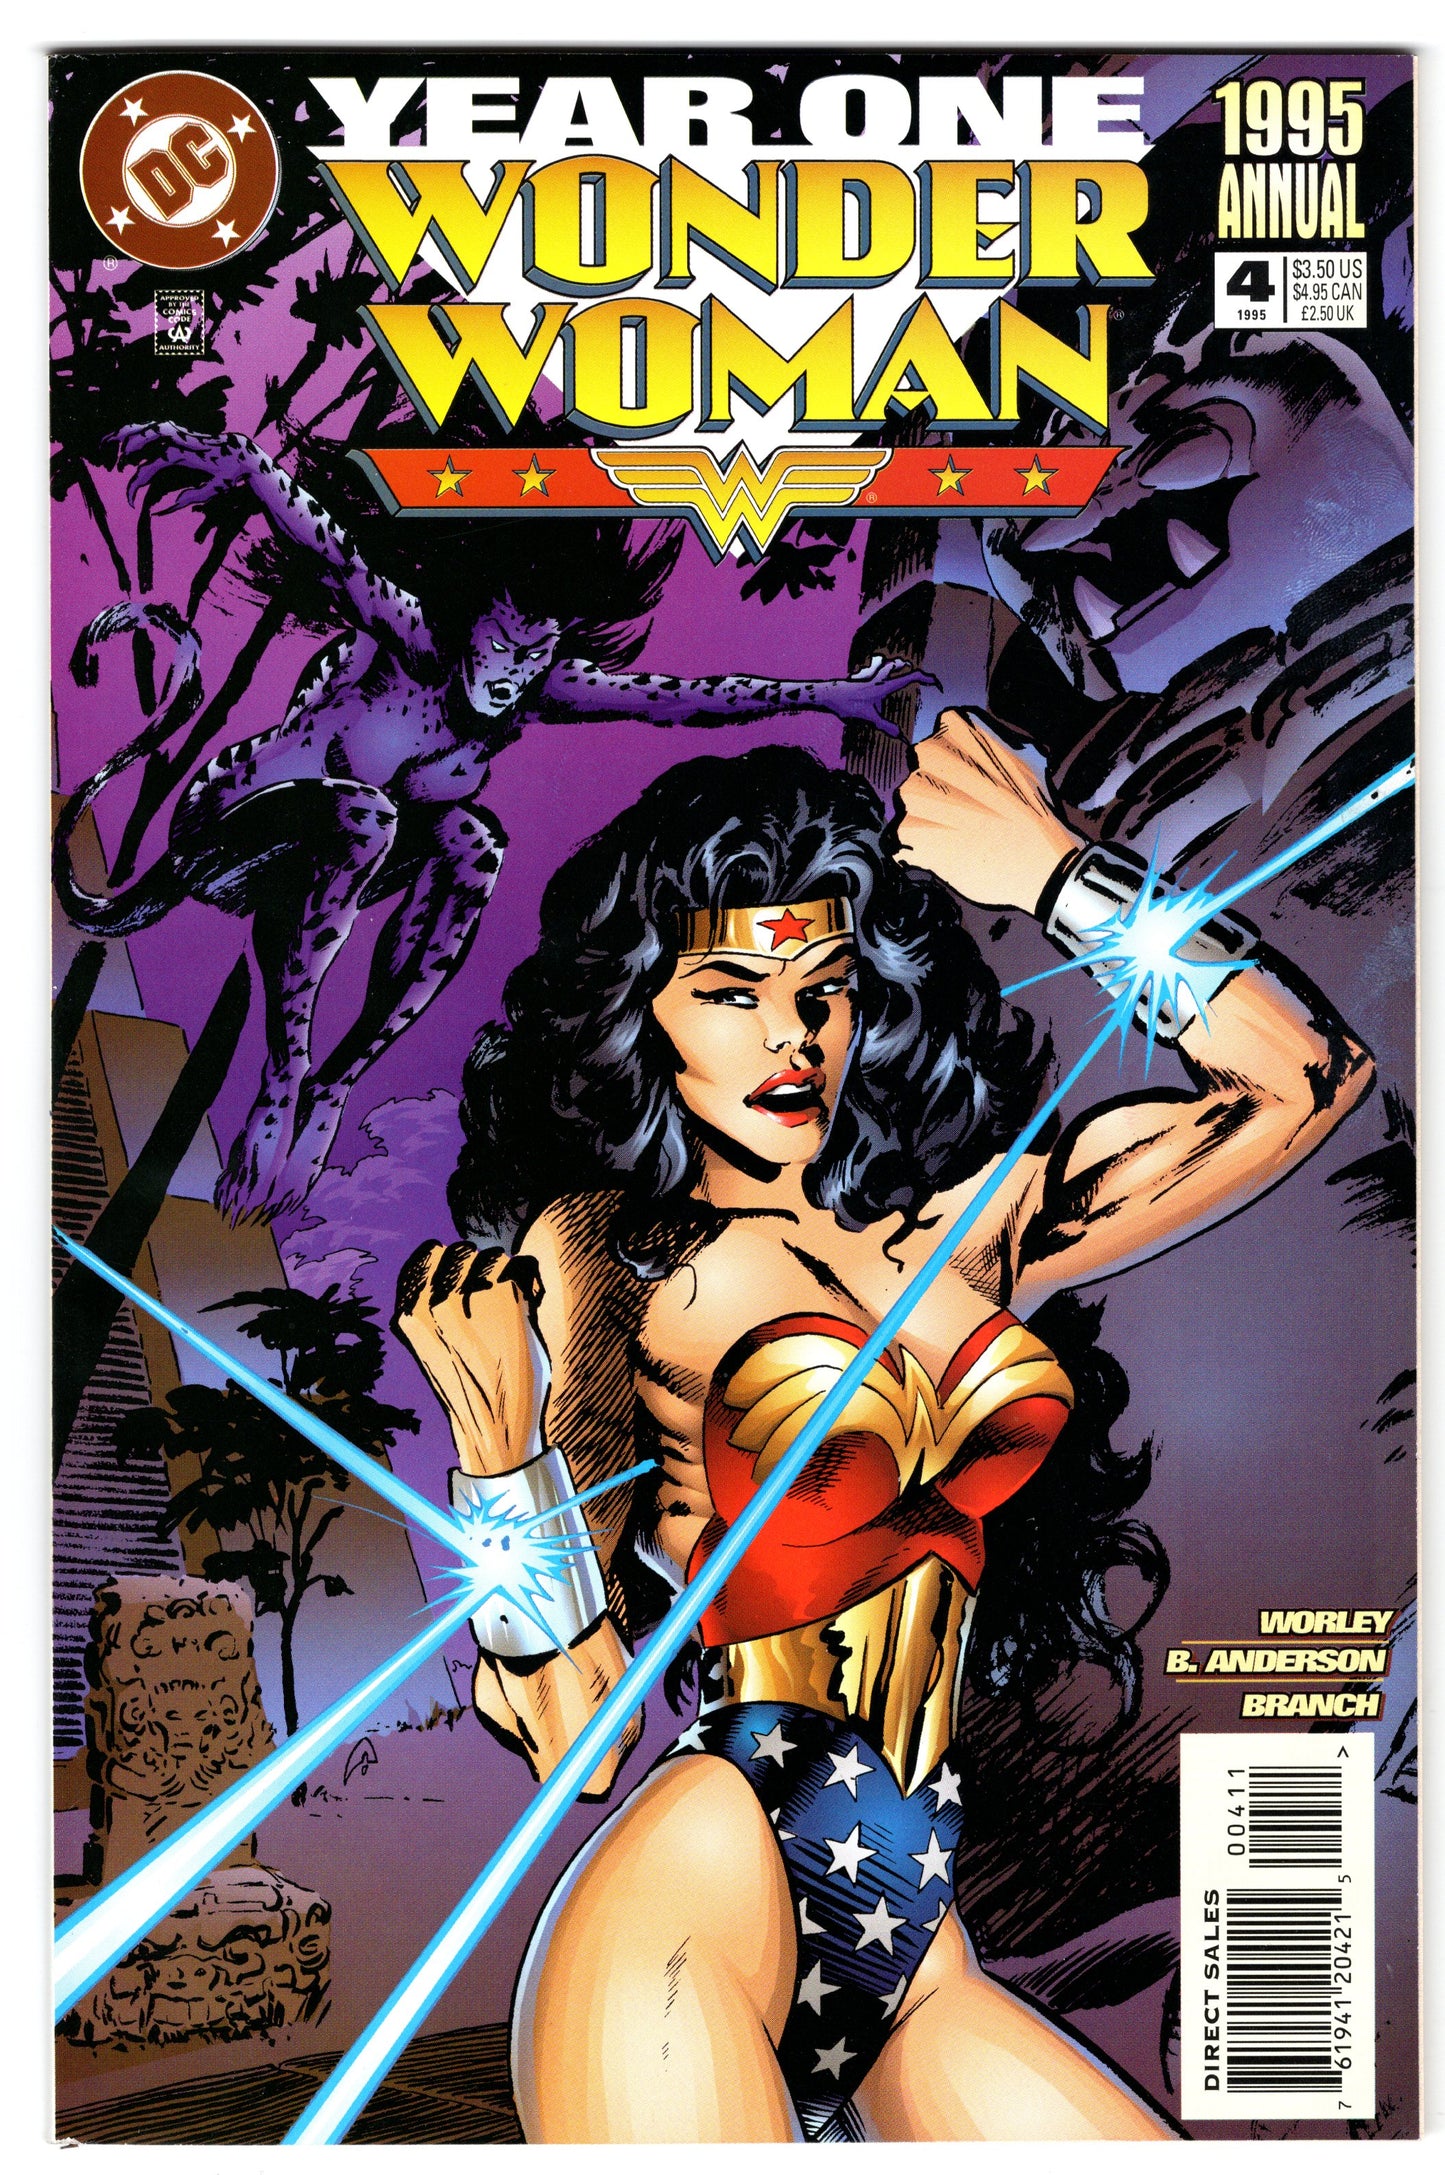 Wonder Woman - Issue #4 ANNUAL (June, 1995 - DC Comics) NM-